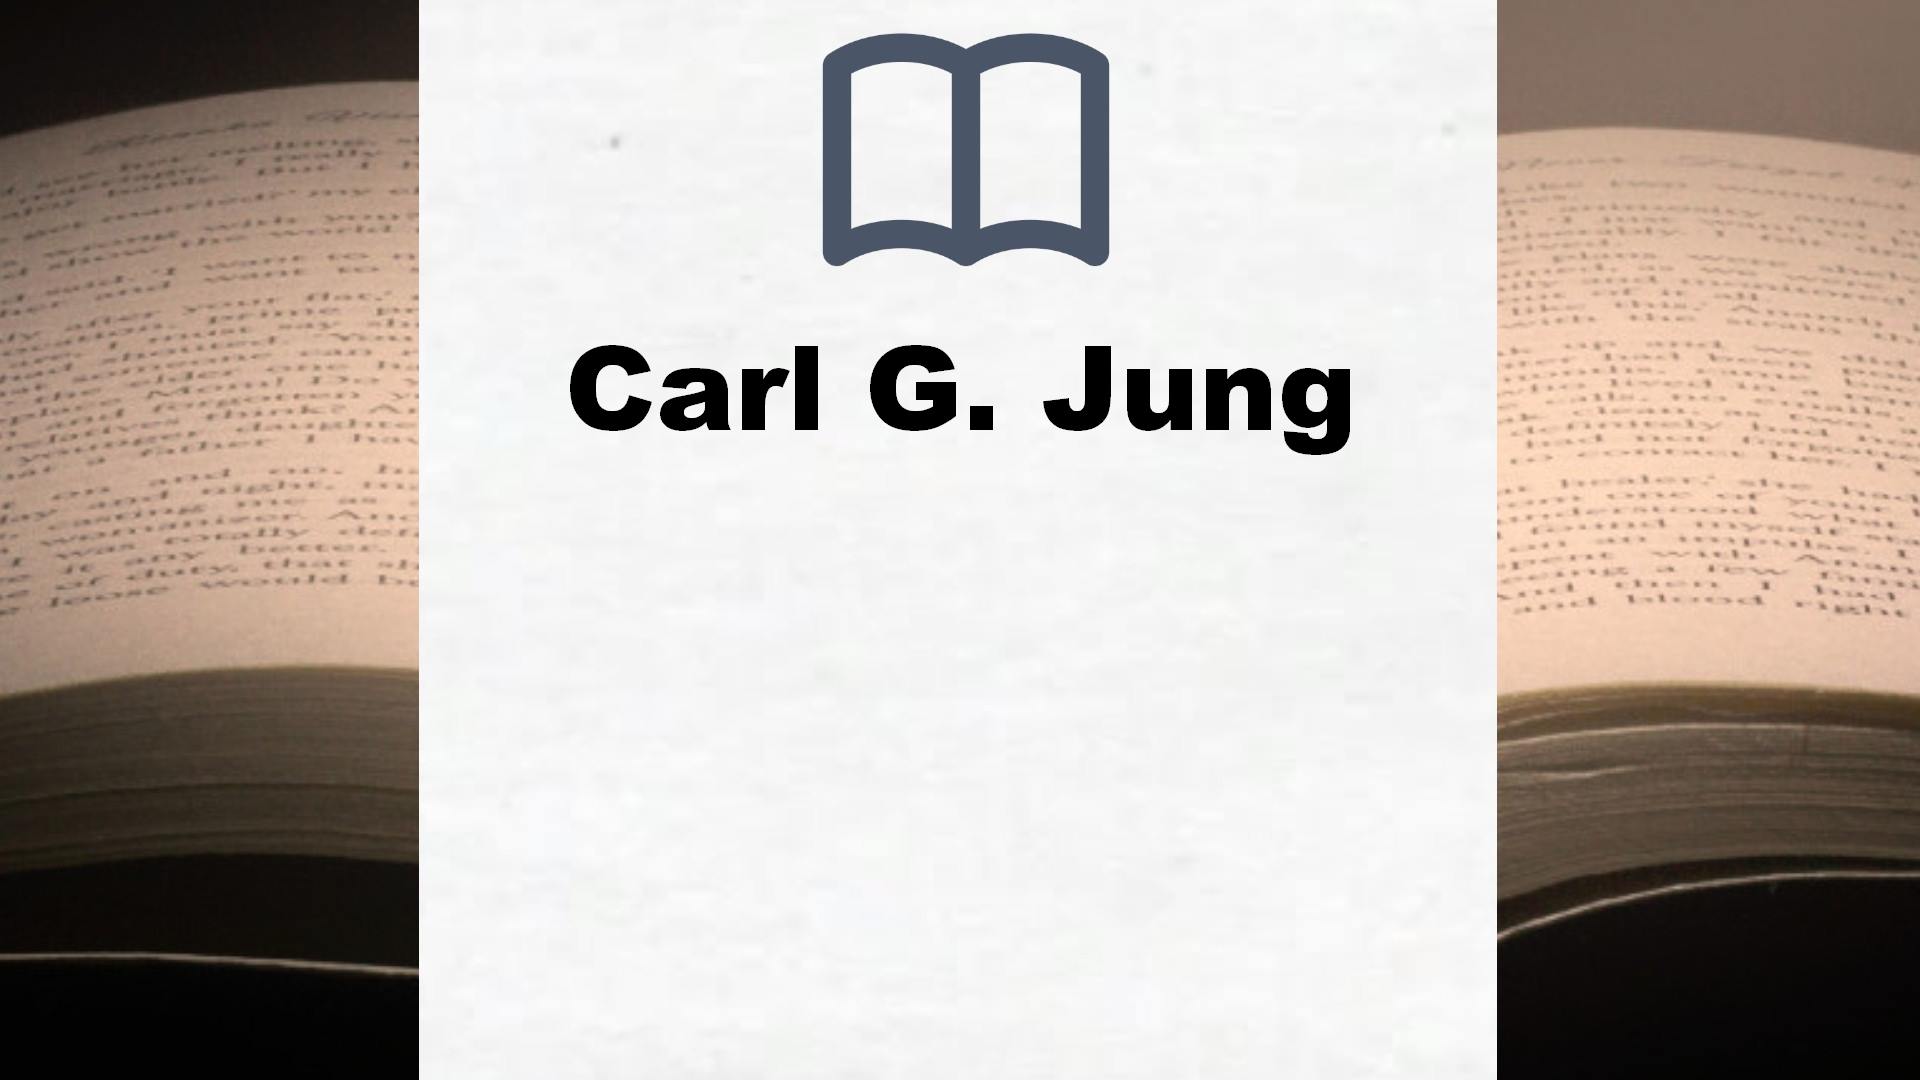 Libros Carl G. Jung